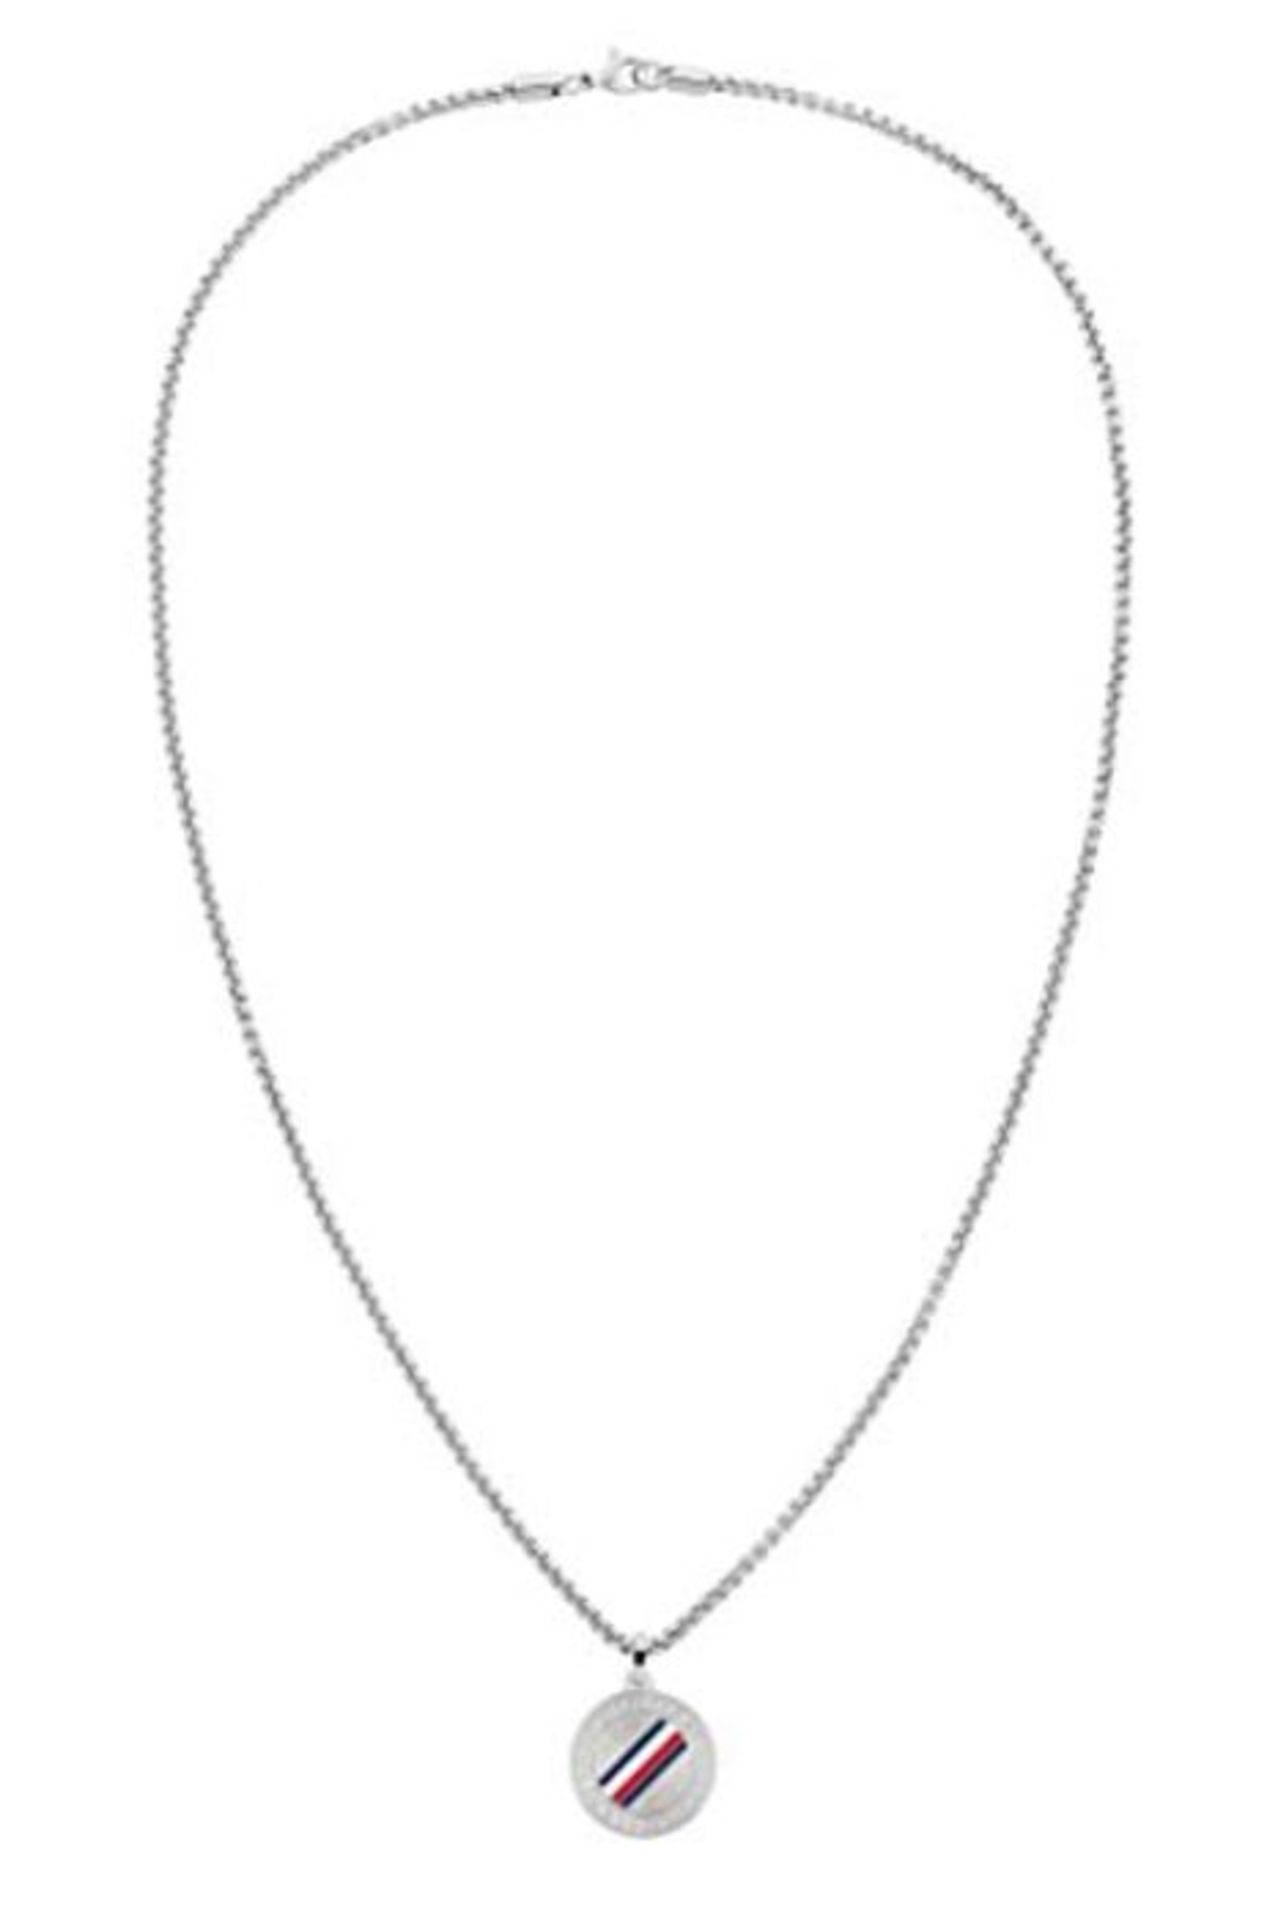 Chain Necklaces (Men) - Image 4 of 6